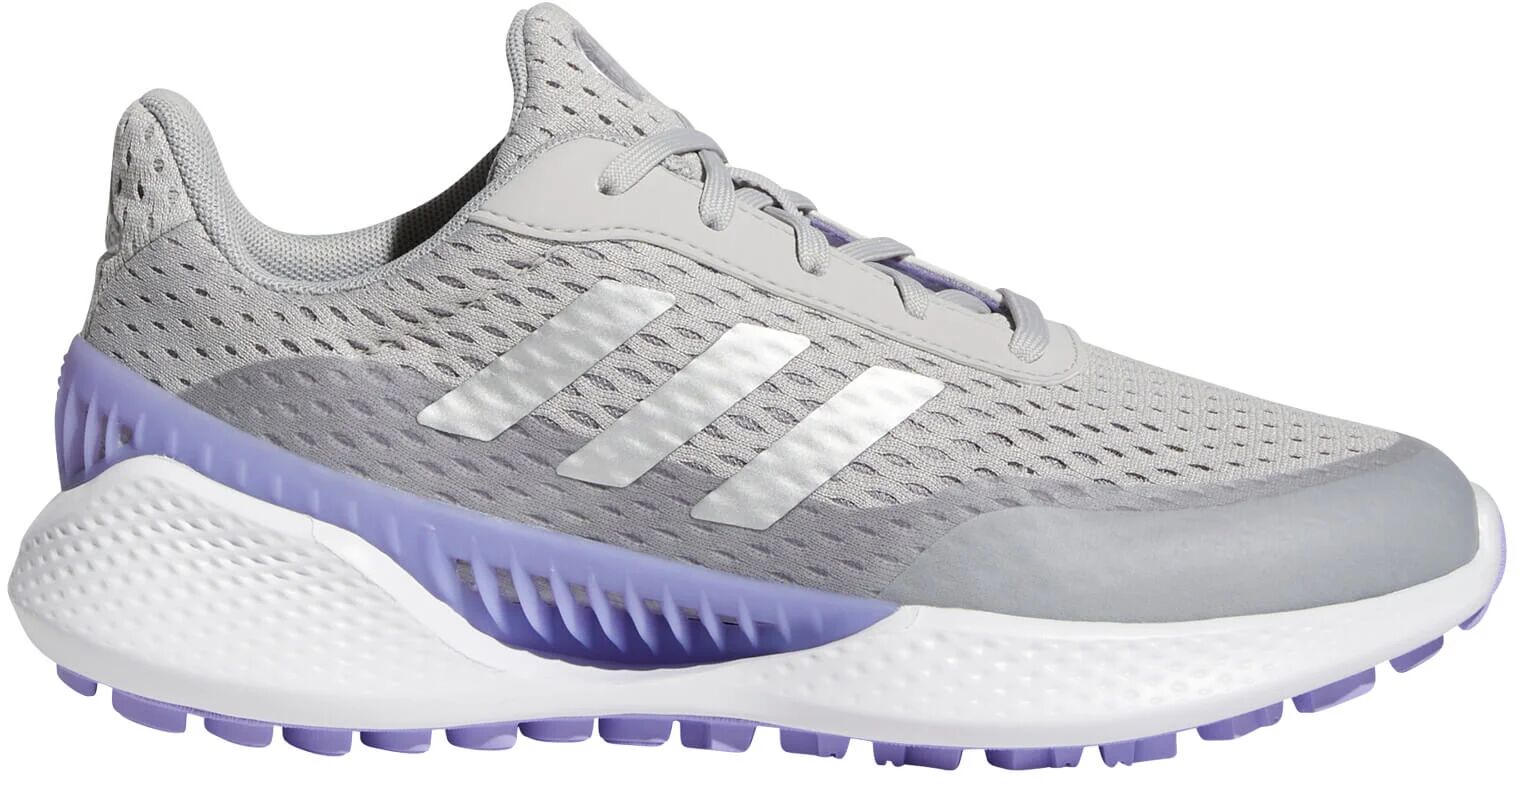 adidas Womens Summervent Golf Shoes - Grey Two/Silver Metallic/Light Purple - 6.5 - M